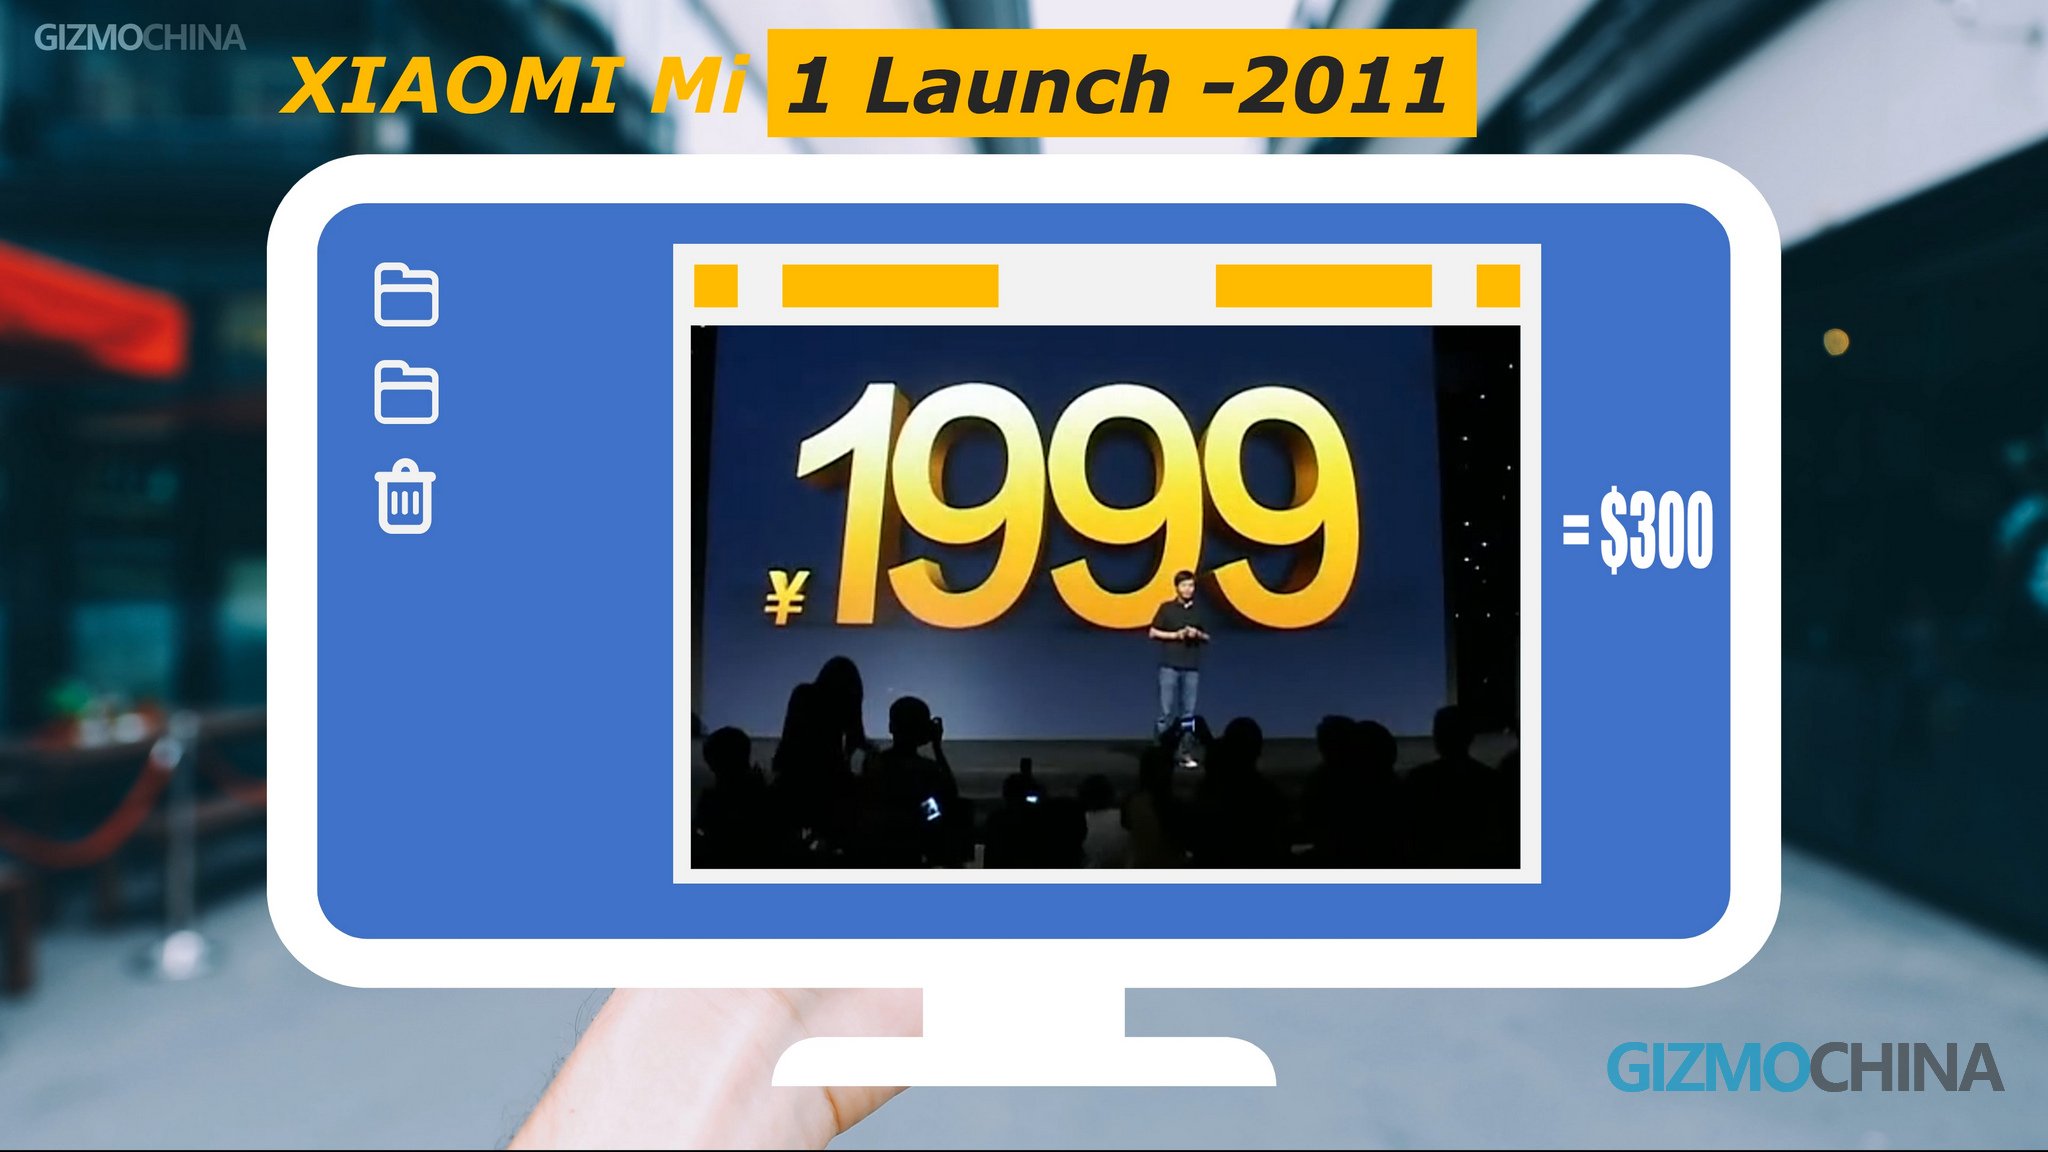 قیمت Xiaomi 1999 یوان